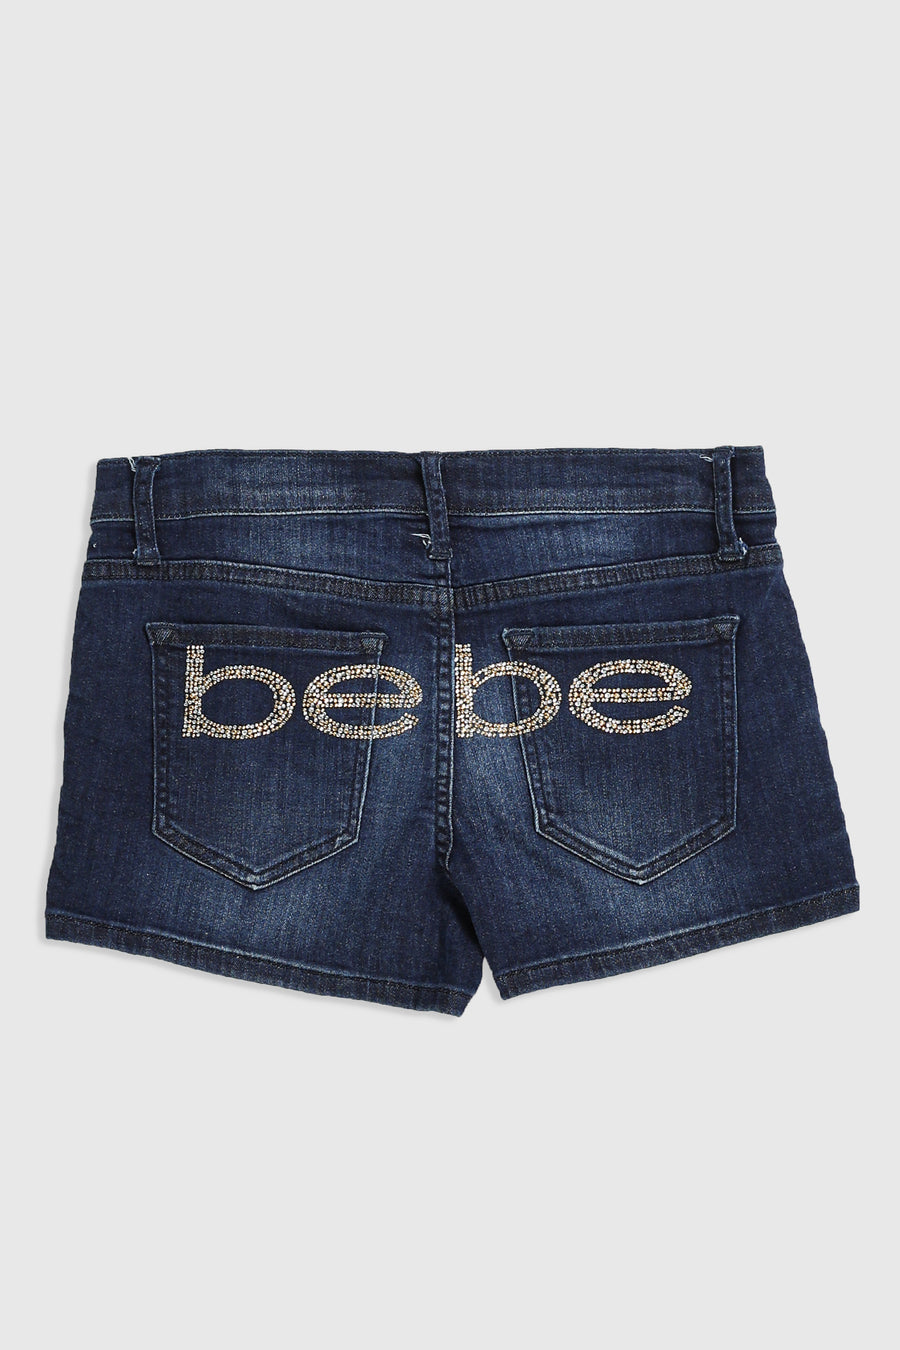 Vintage Bebe Denim Shorts - S